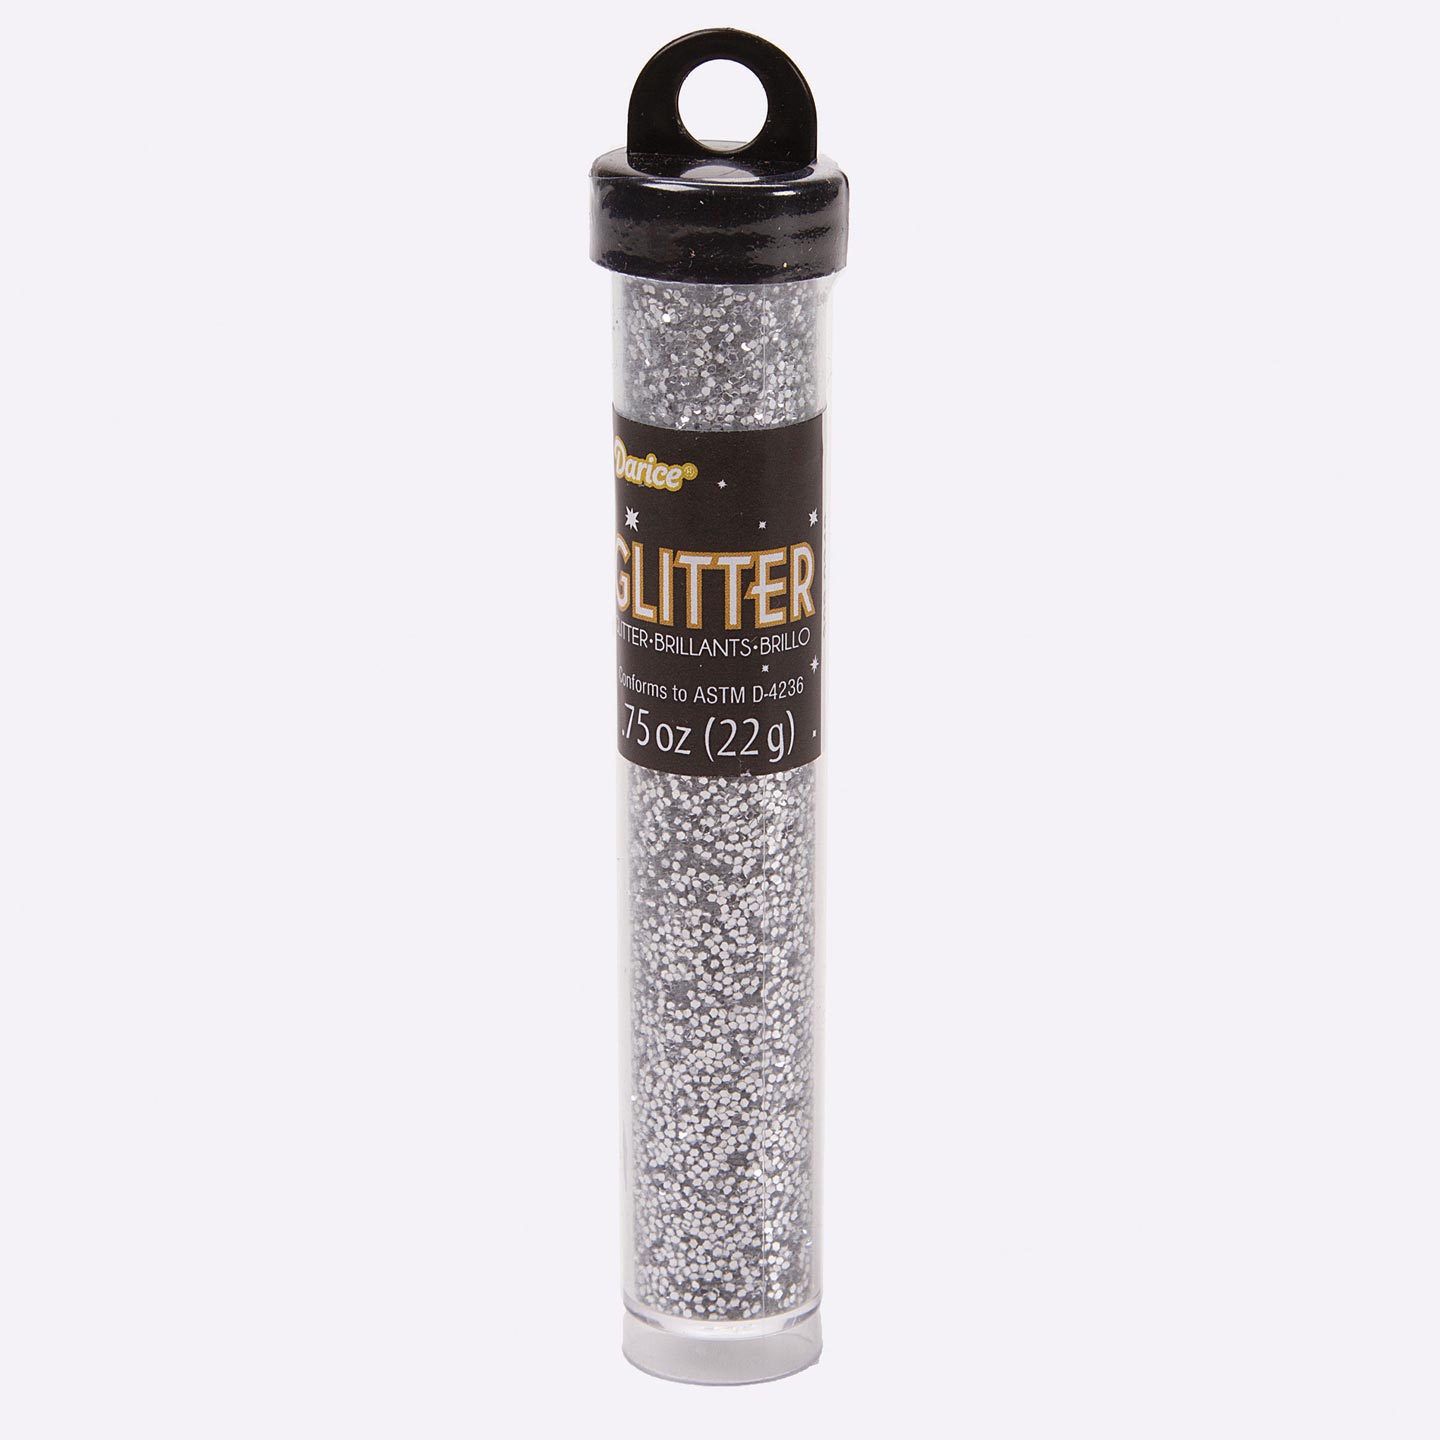 Glitters - Glitter Suppliers - Glitter for Sale